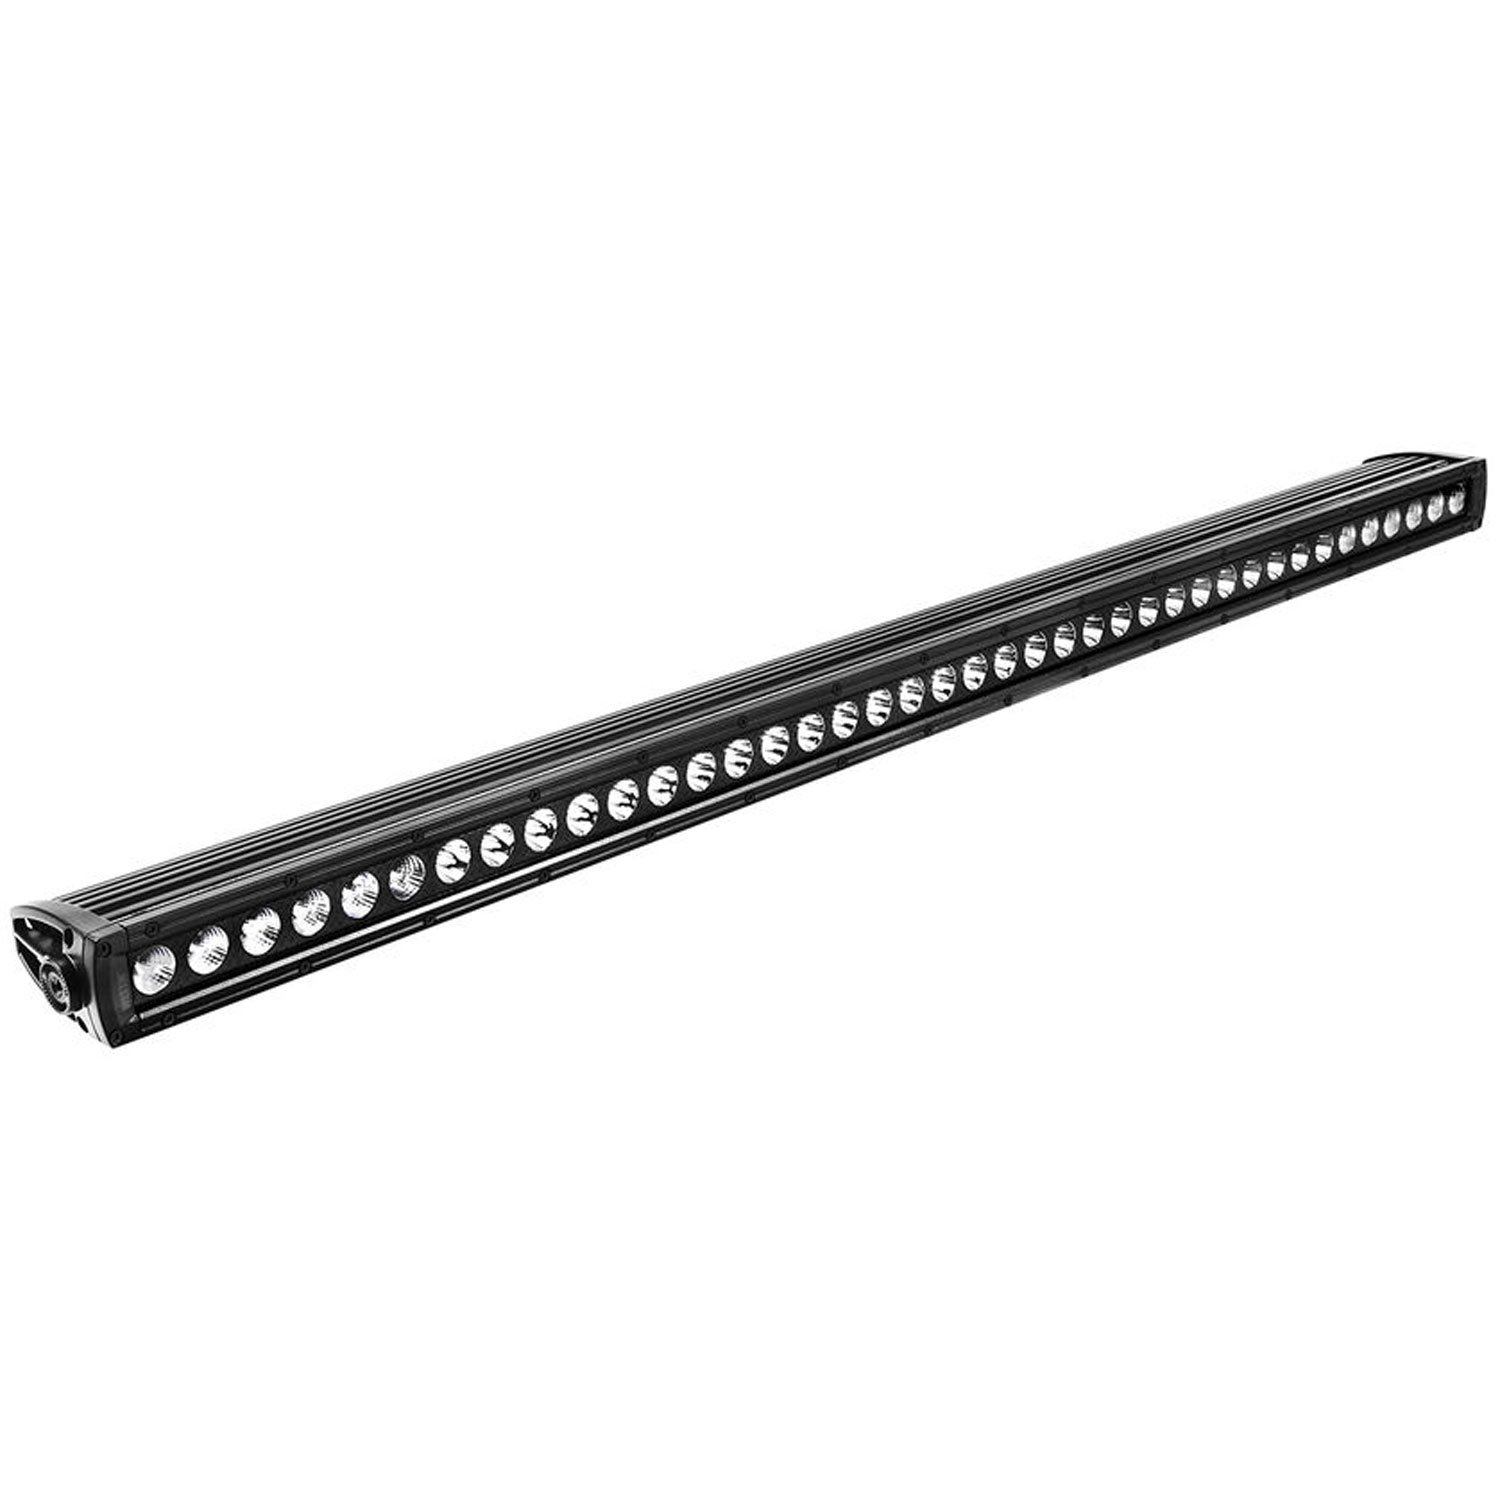 B-Force Single-Row LED Light Bar 40"